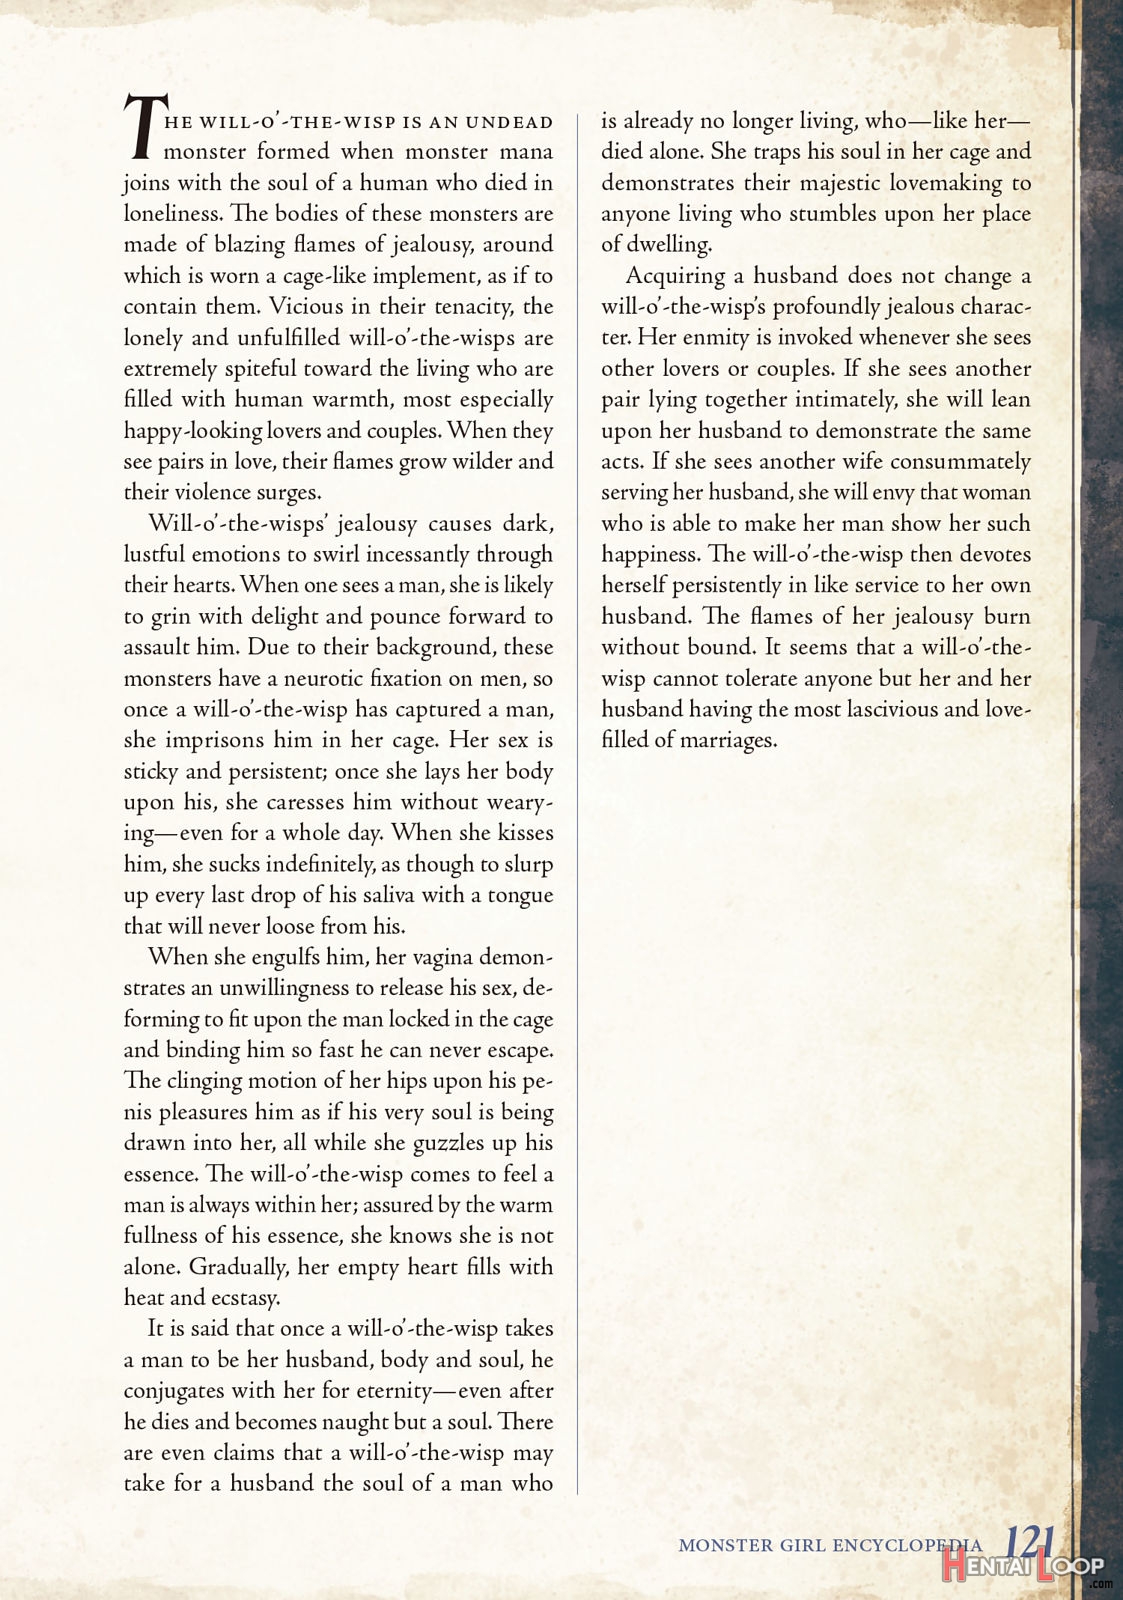 Monster Girl Encyclopedia Vol. 2 page 122